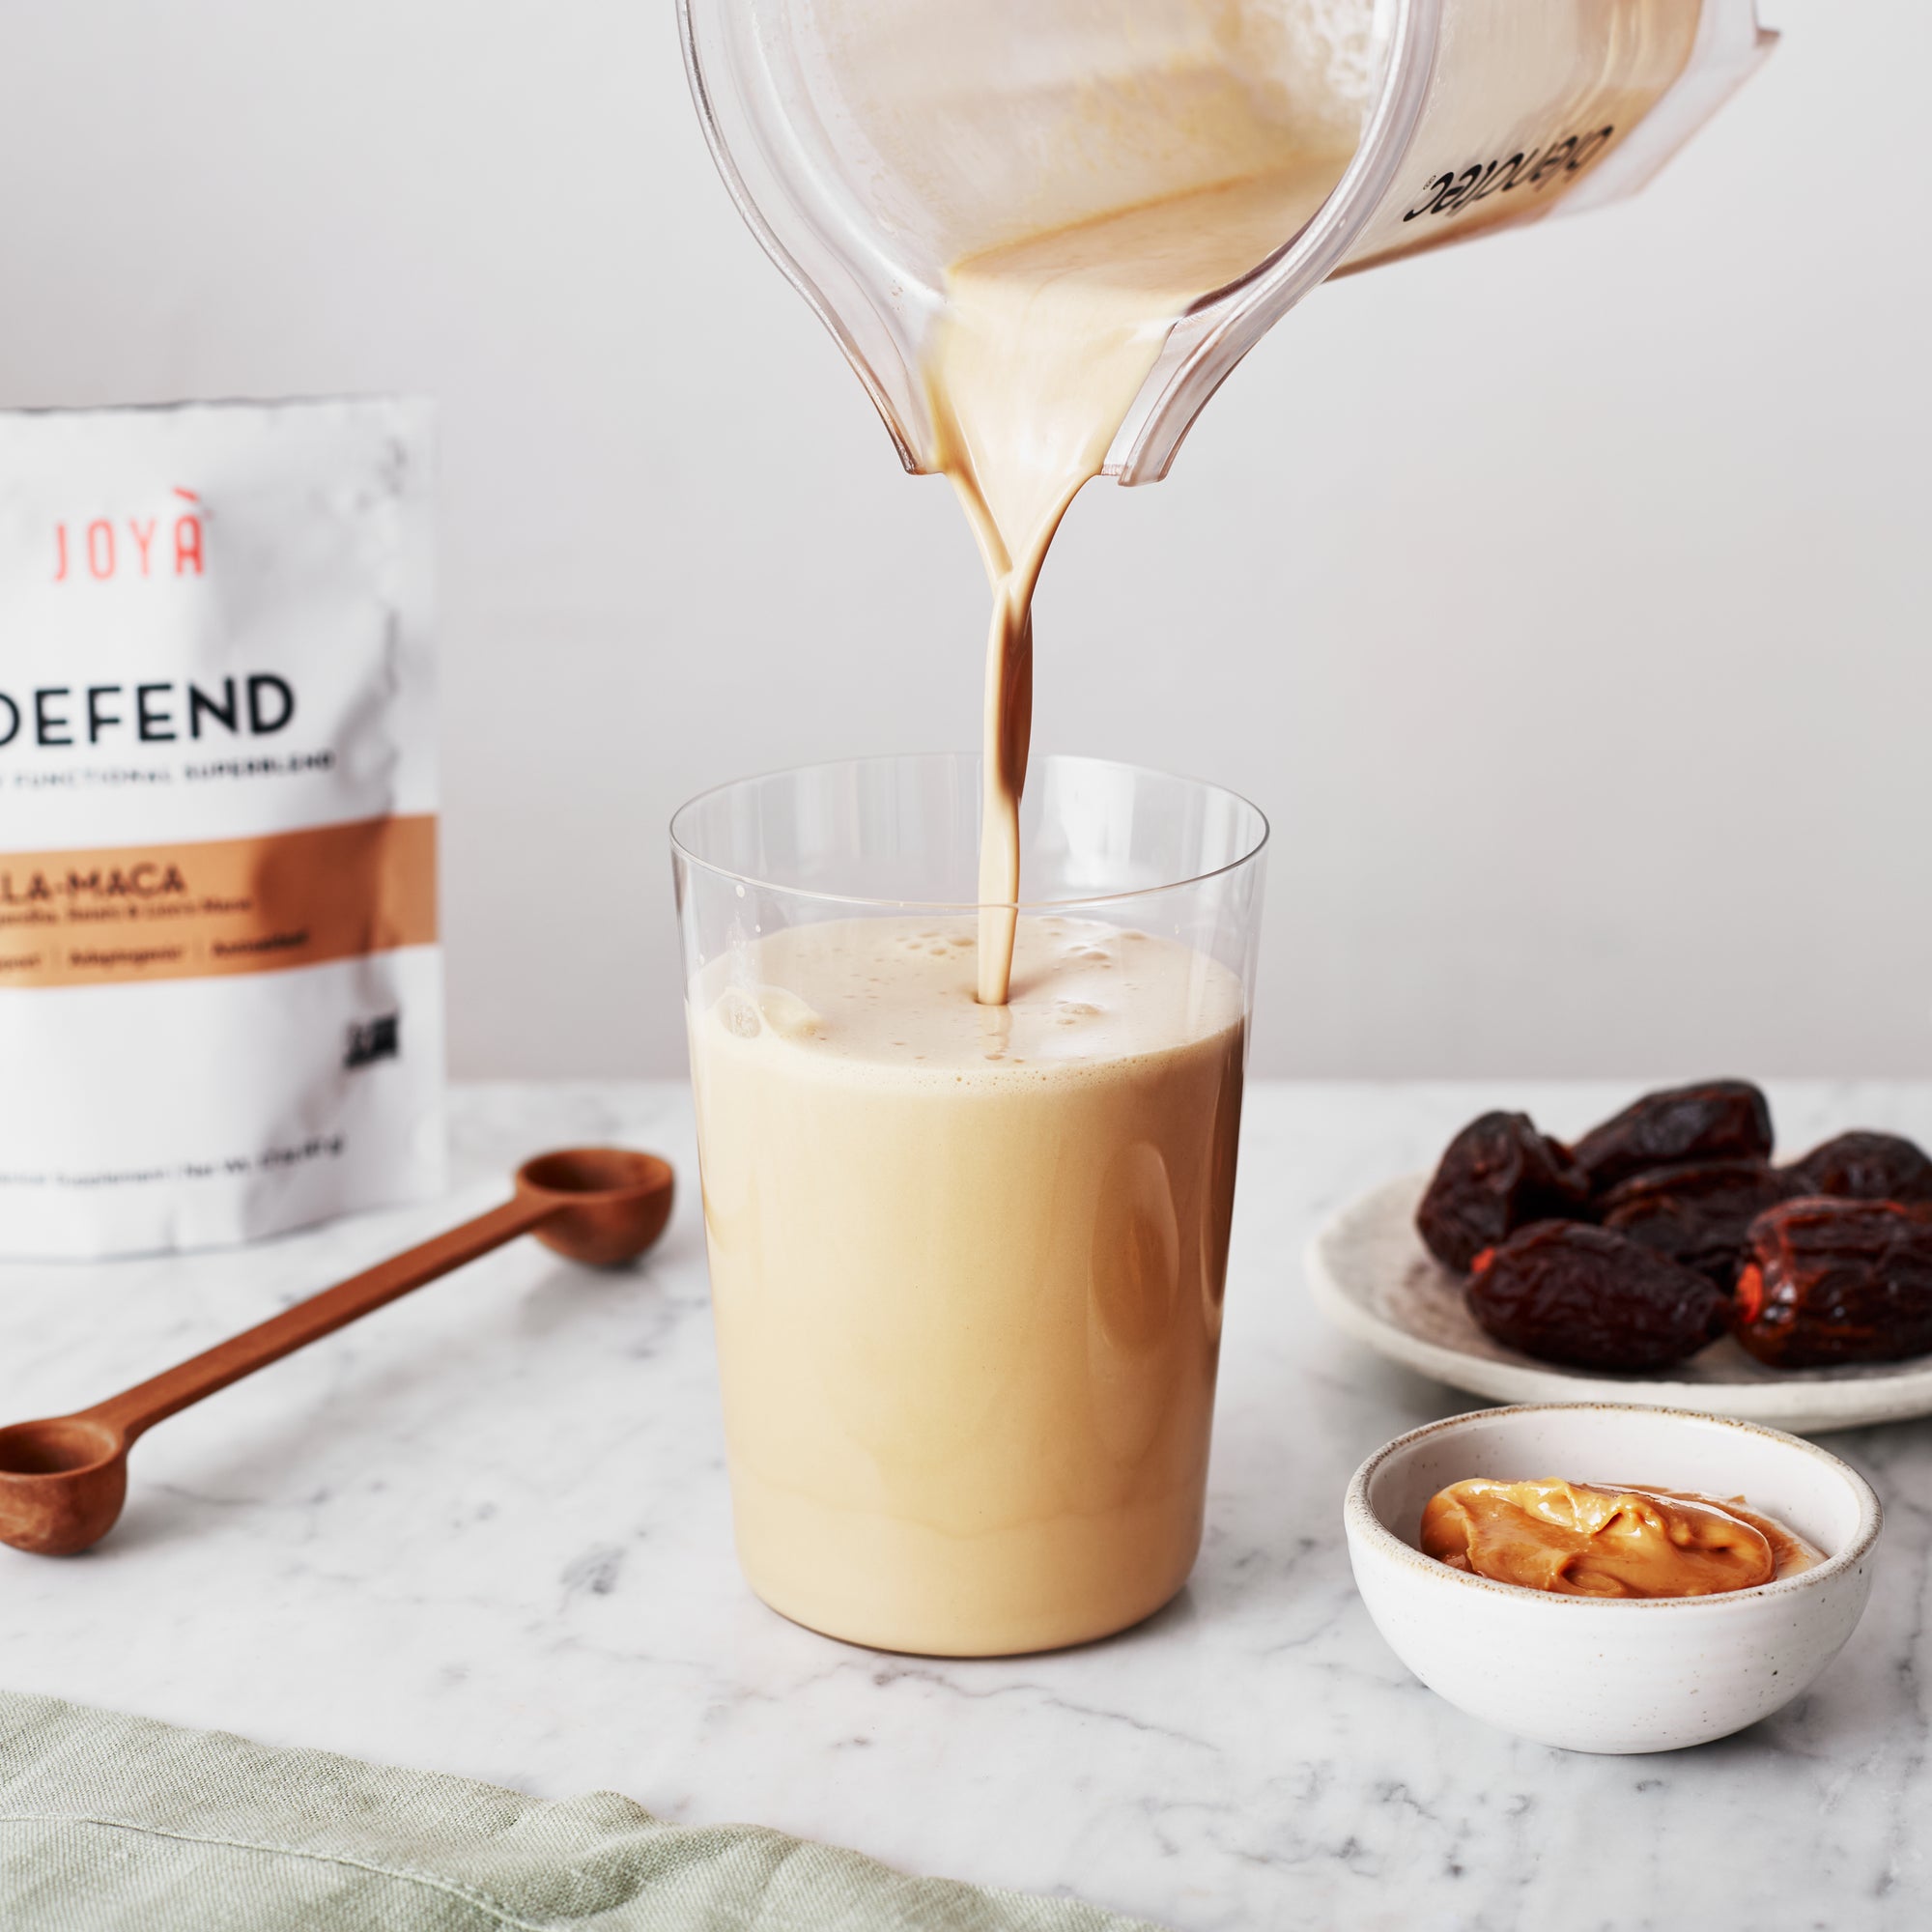 Peanut Butter Protein Shake with JOYÀ's Defend Vanilla-Maca Superblend